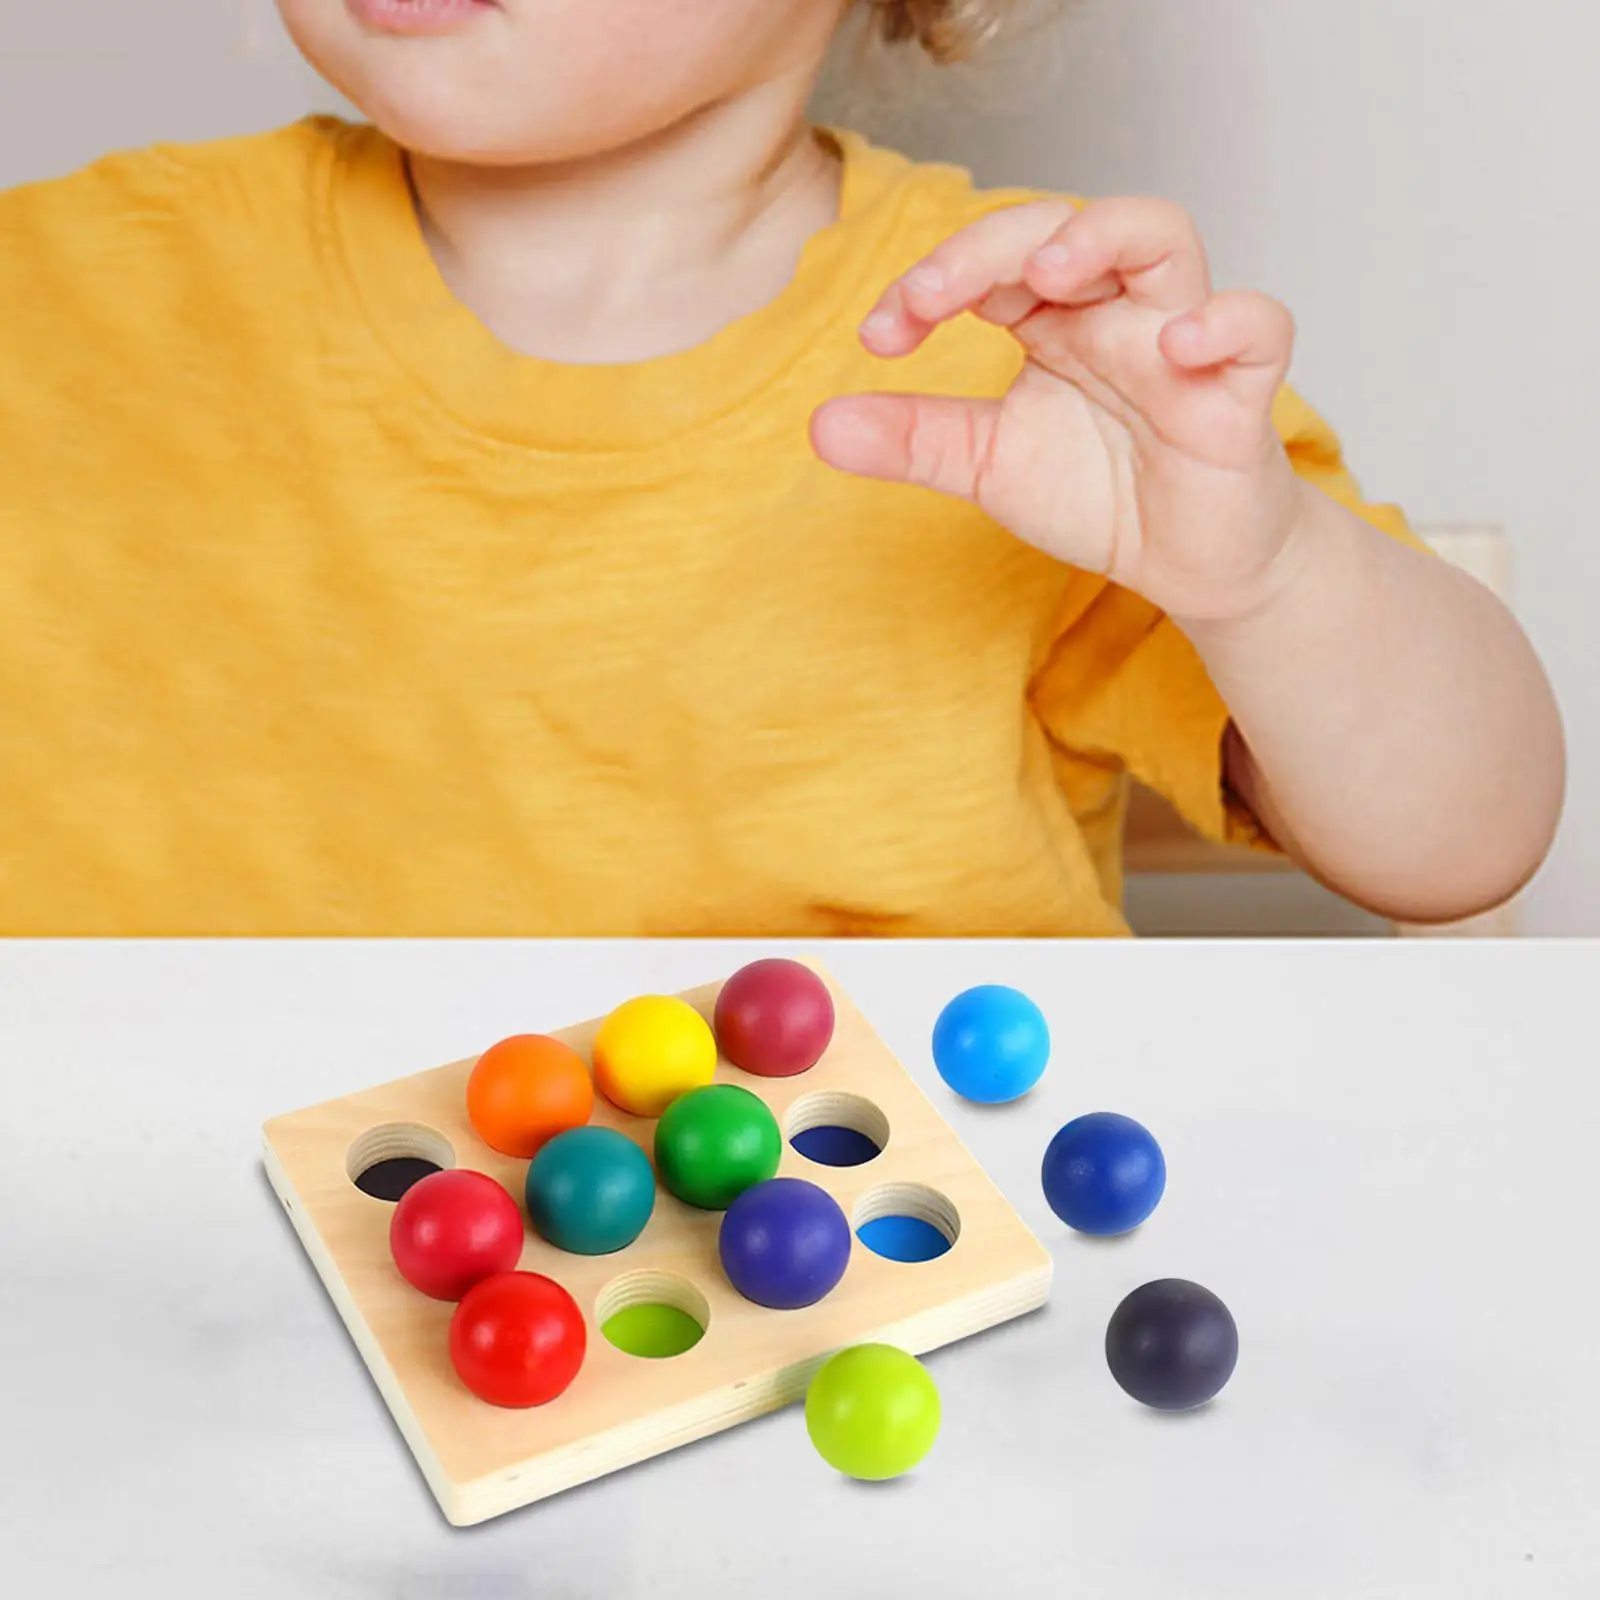 

Wooden Color Sorting Balls Game Educational Board Game for Kids Children Sensory 12 Activities Balls Fine Motor Skills Peg Board